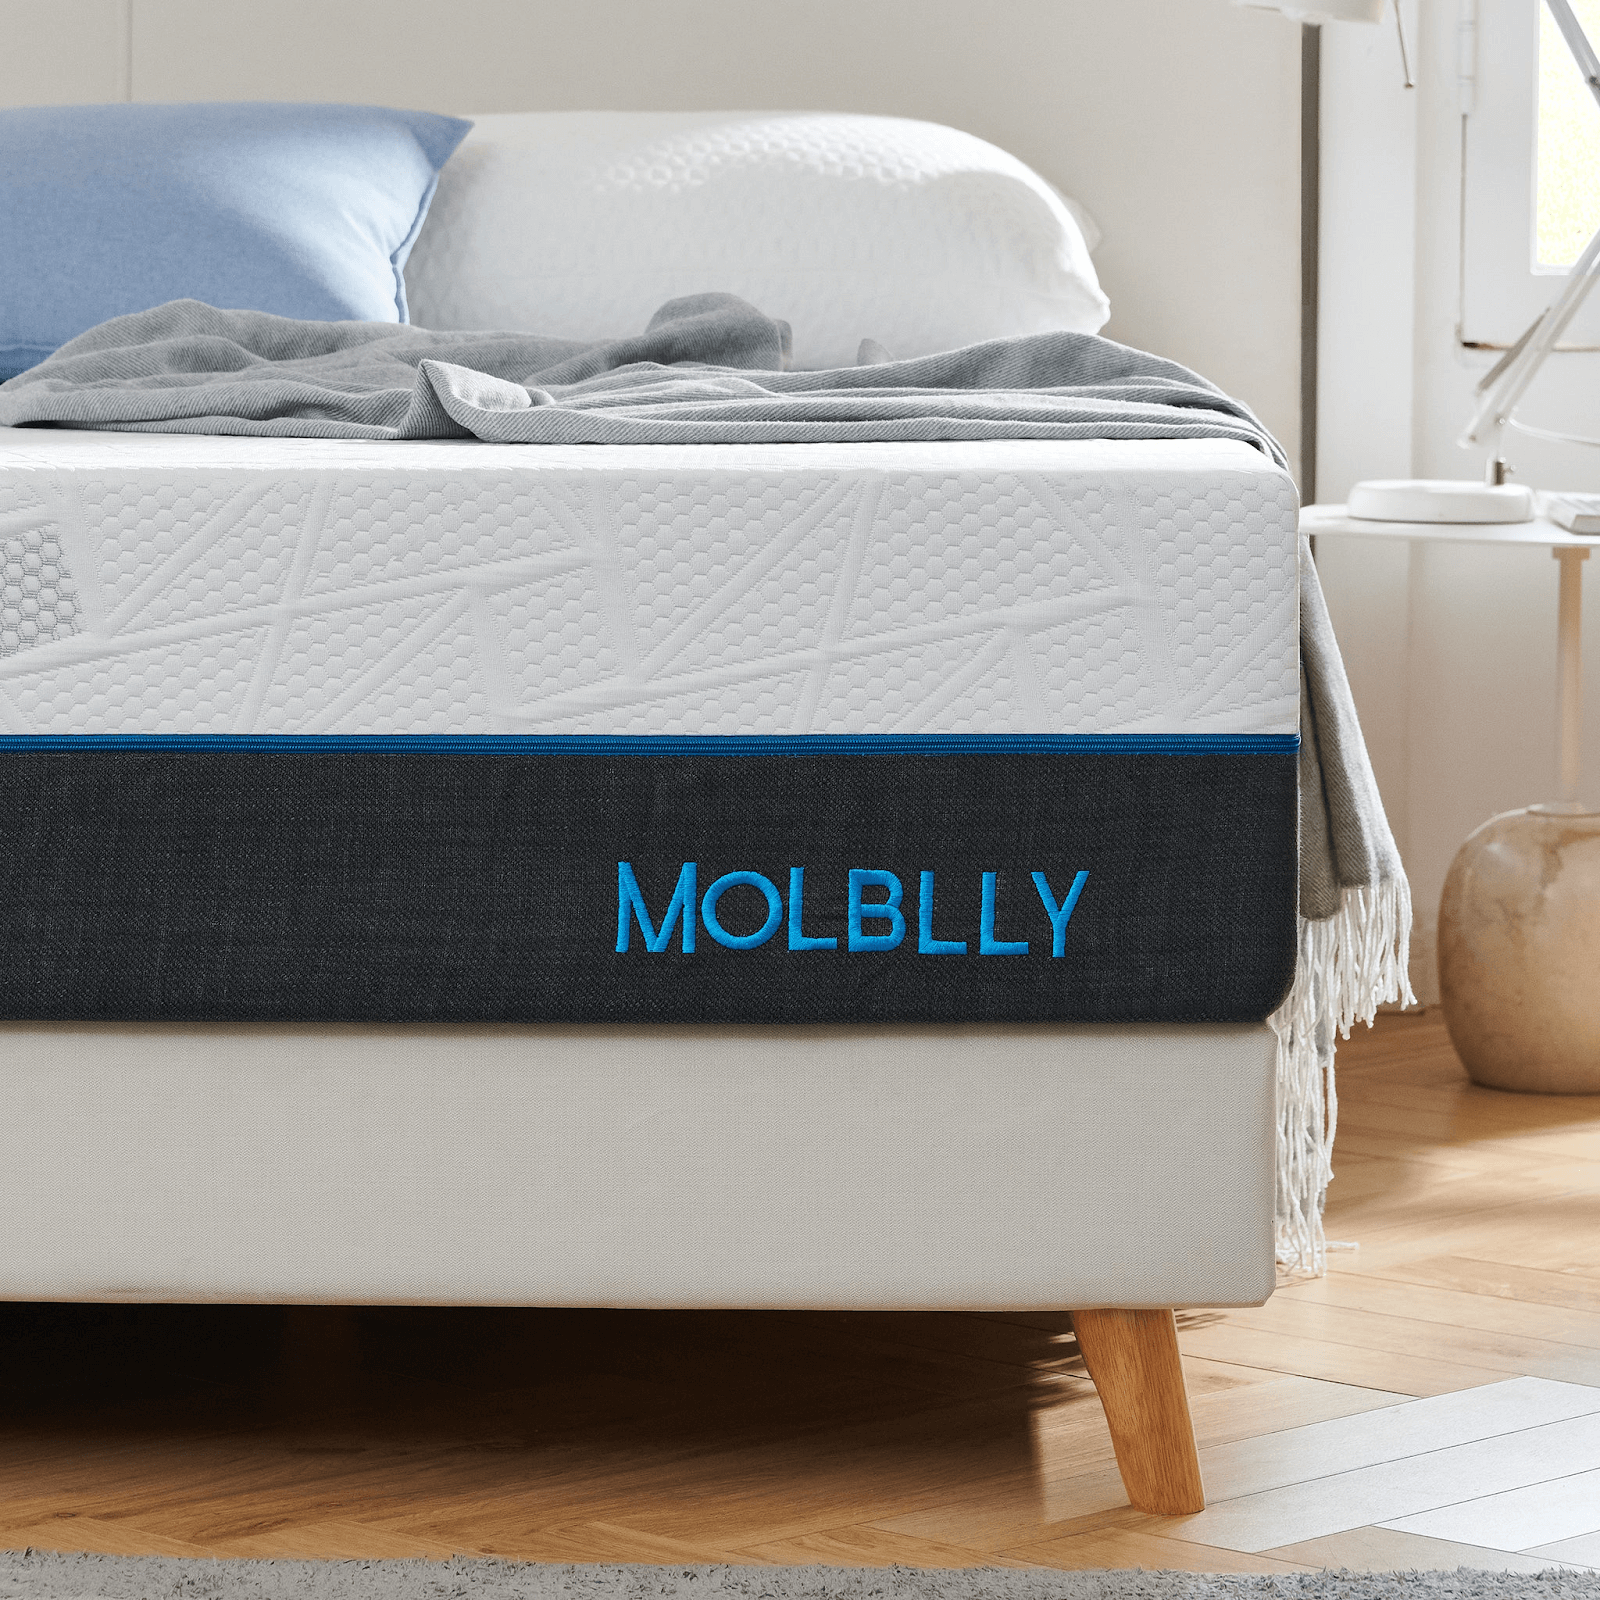 Molblly mattress.